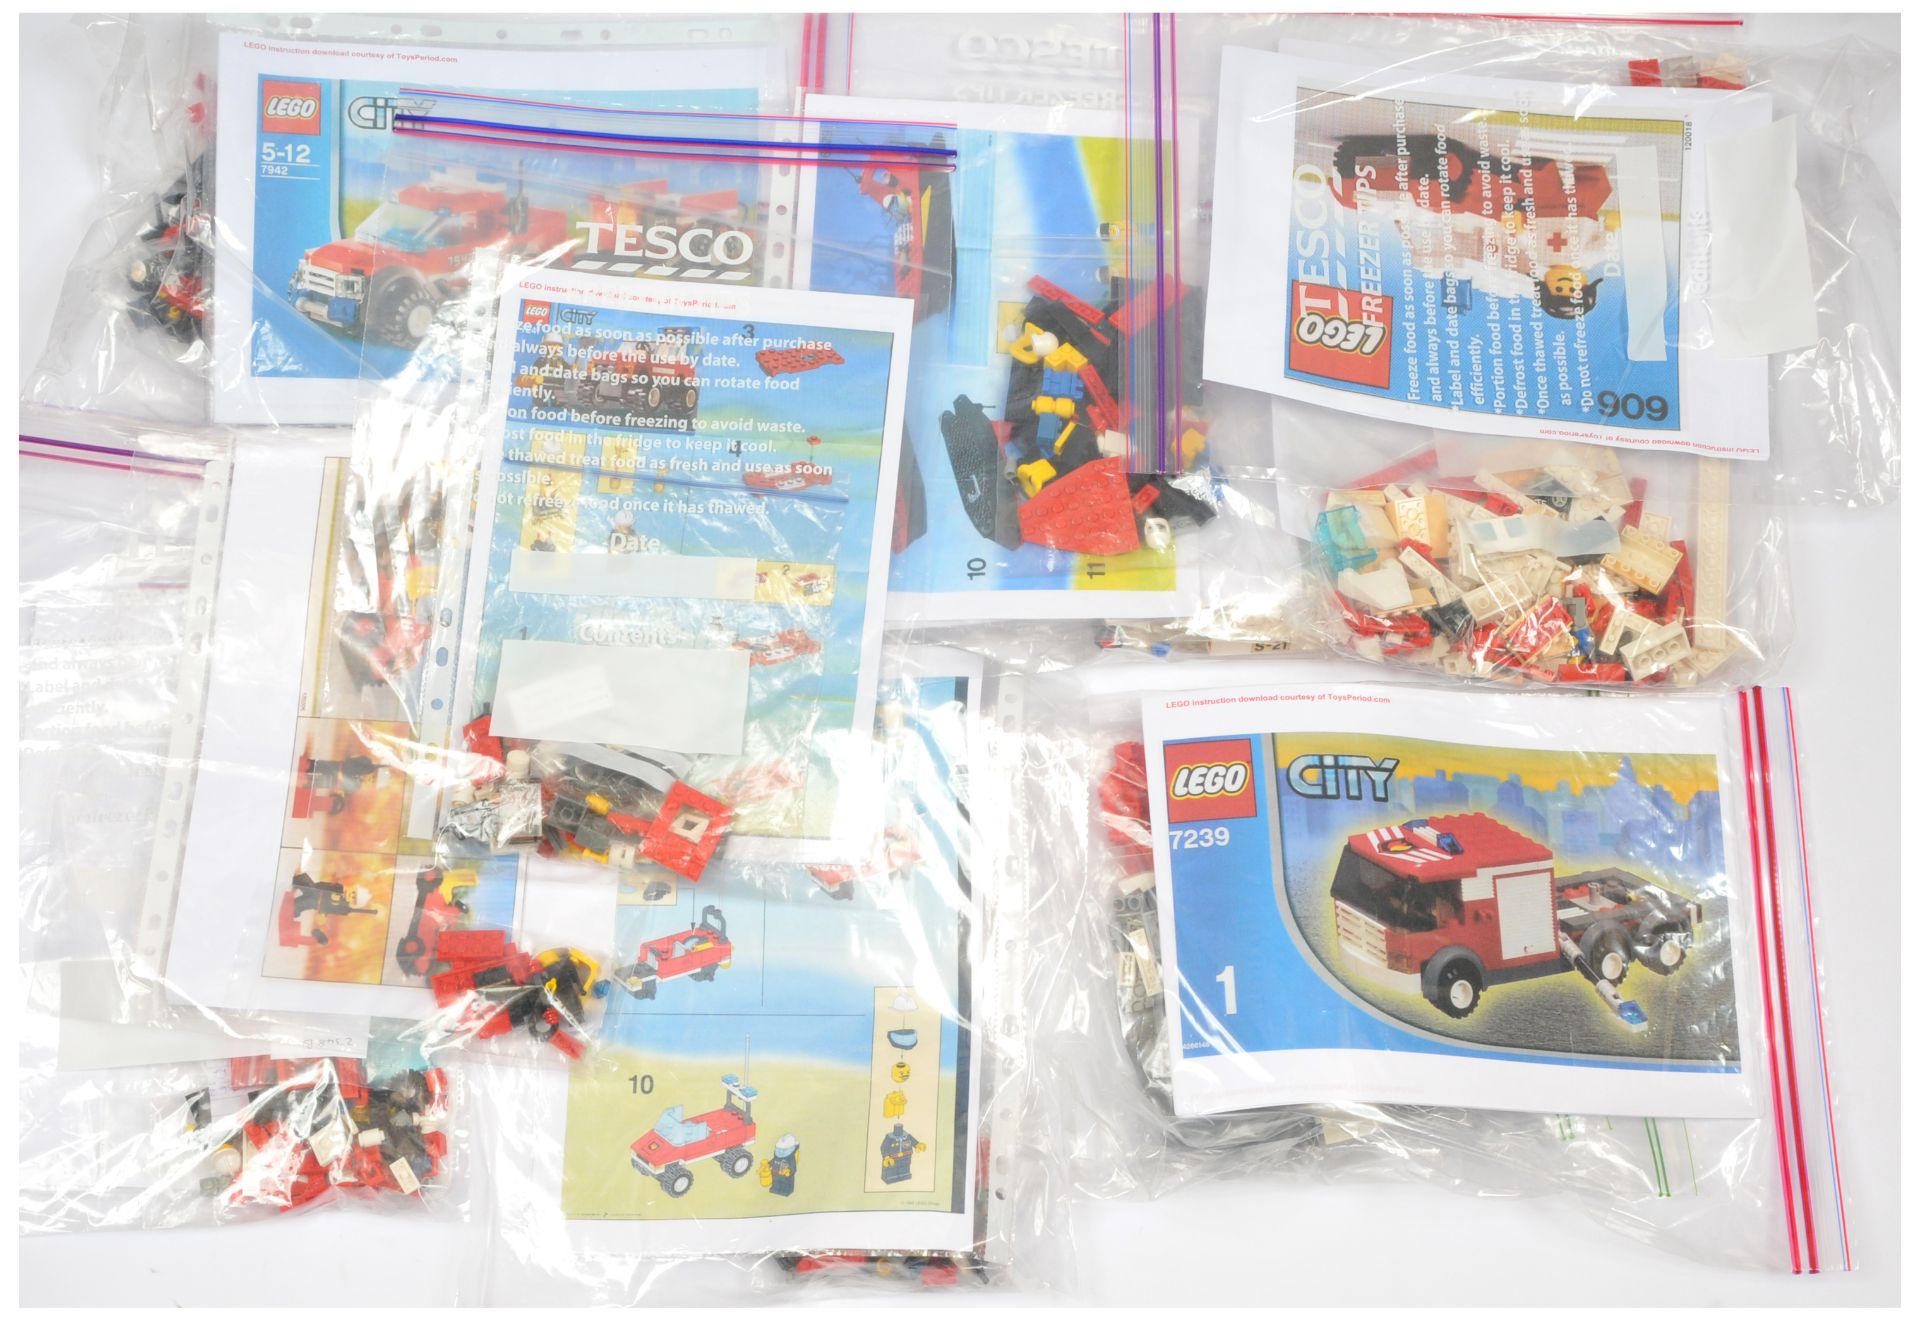 Lego Emergency group to include 606 Ambulance; 653 Legoland; 6679 Fire Boat; 7239 Fire Engine; 63...